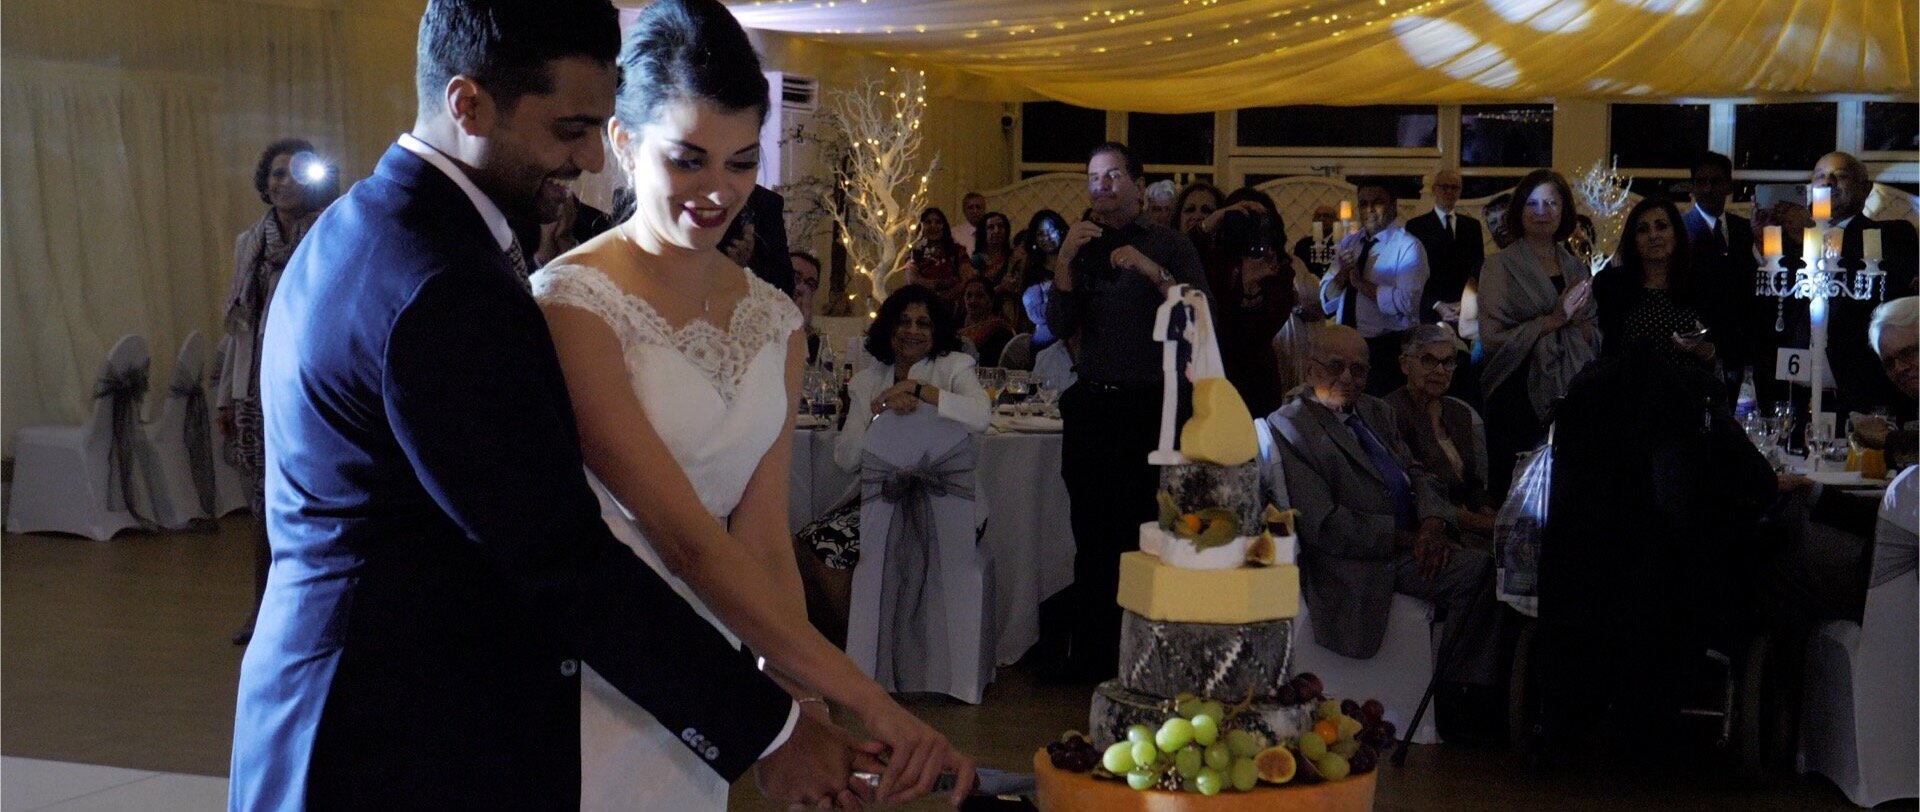 Cutting the cheese cake wedding video.jpg